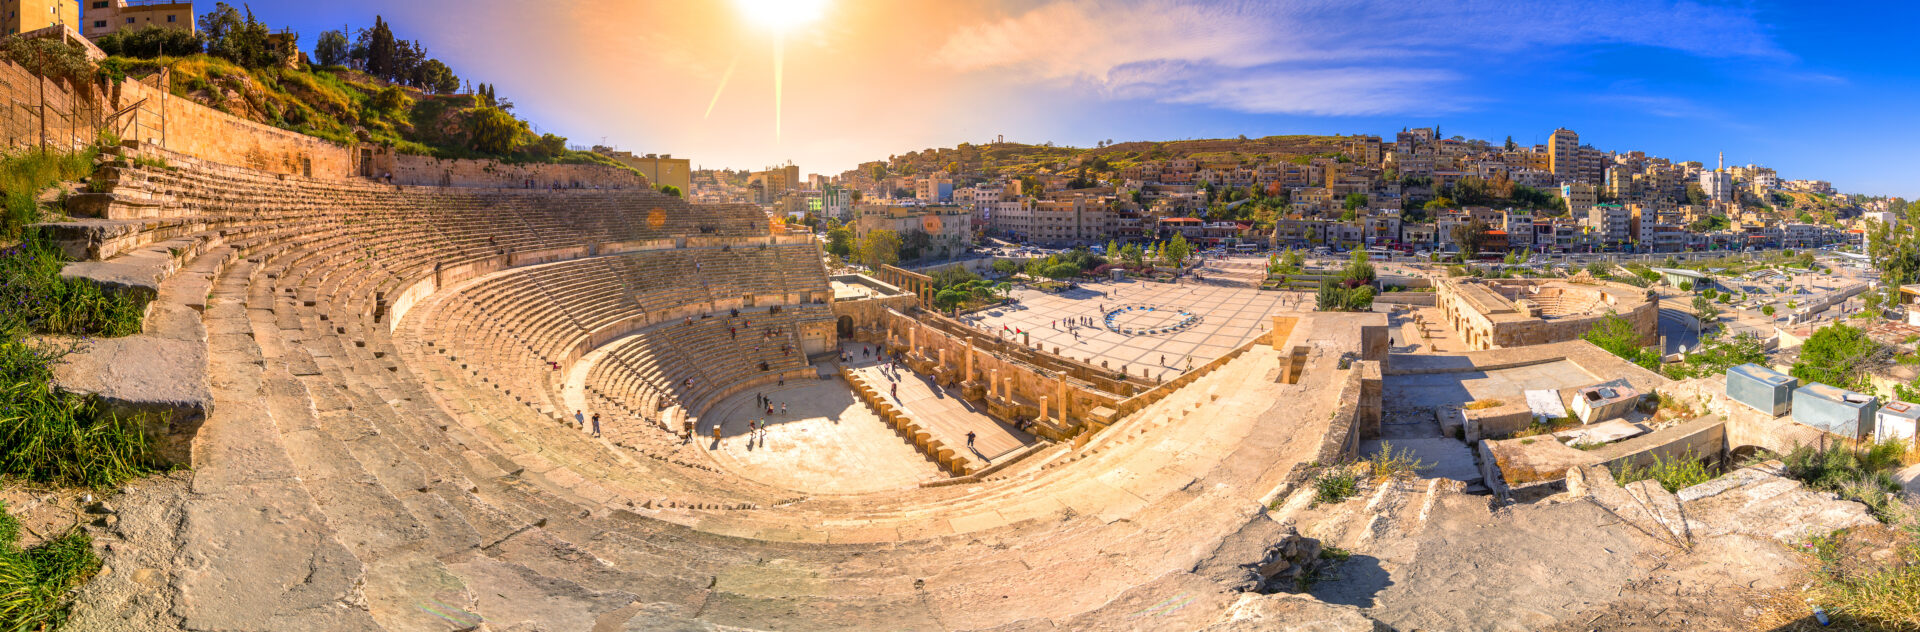 JO_Jerash_Roman Theater and view of city of Amman_RF_ss1386919070